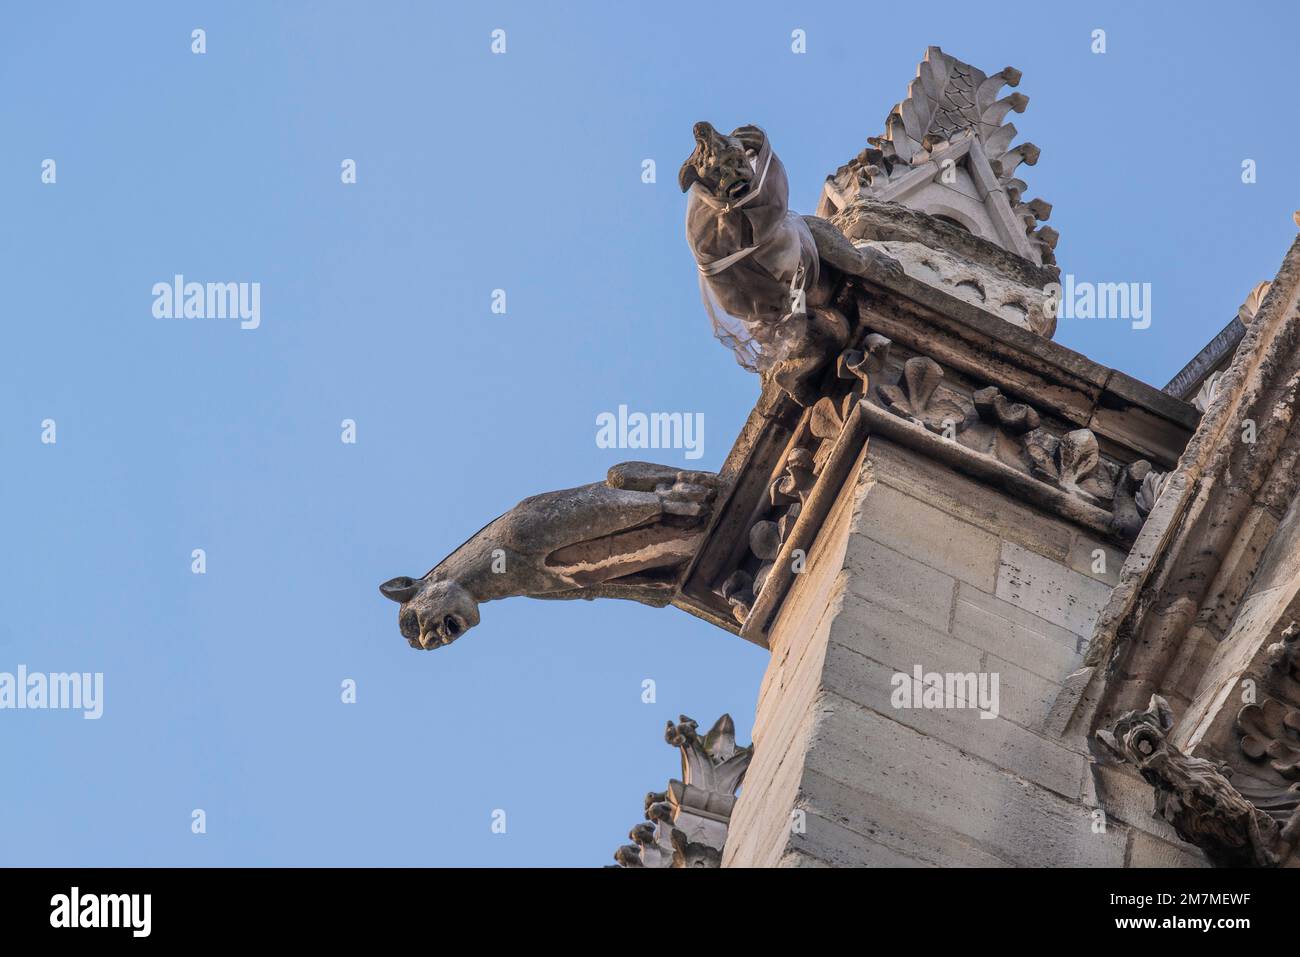 Paris, France - Dec. 27 2022: The Gothic style Gargoyle on the roof of Saint-Chapelle in Paris Stock Photo